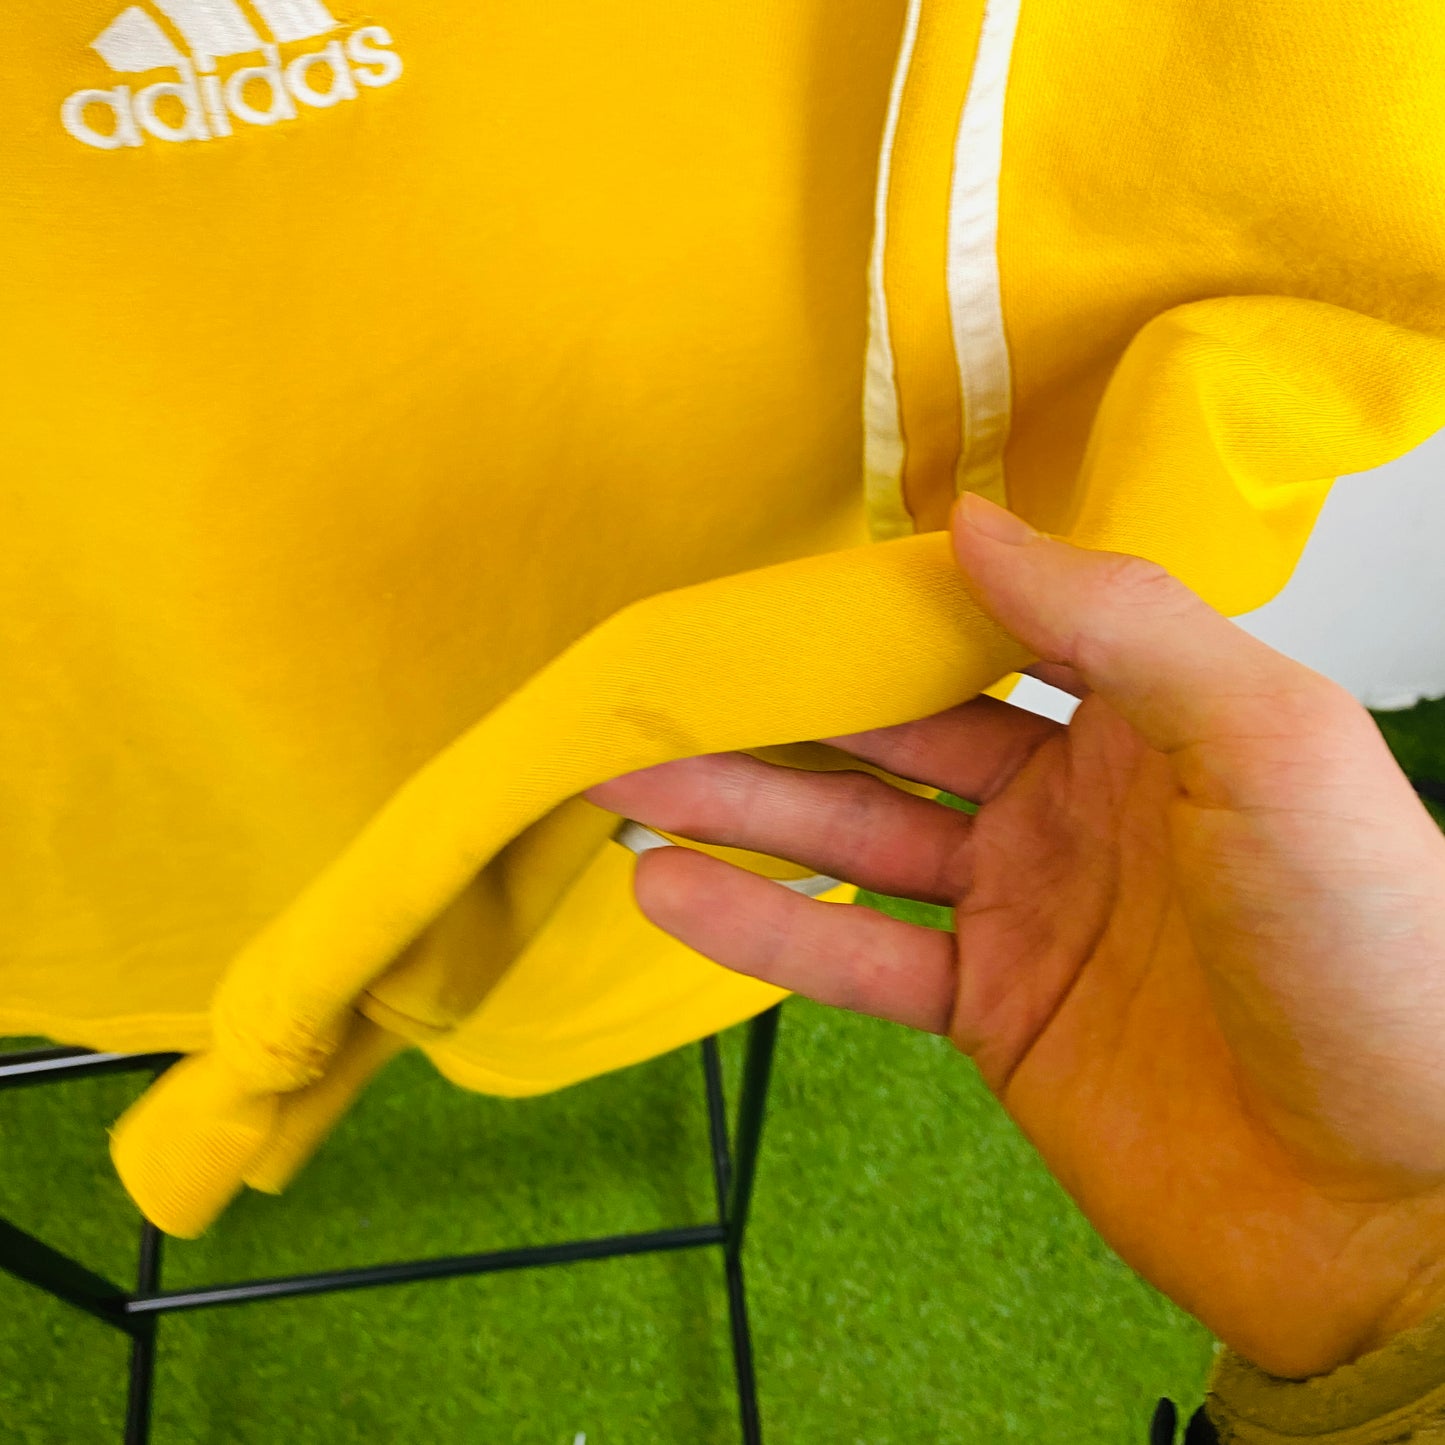 90s Adidas Sweatshirt Yellow XS